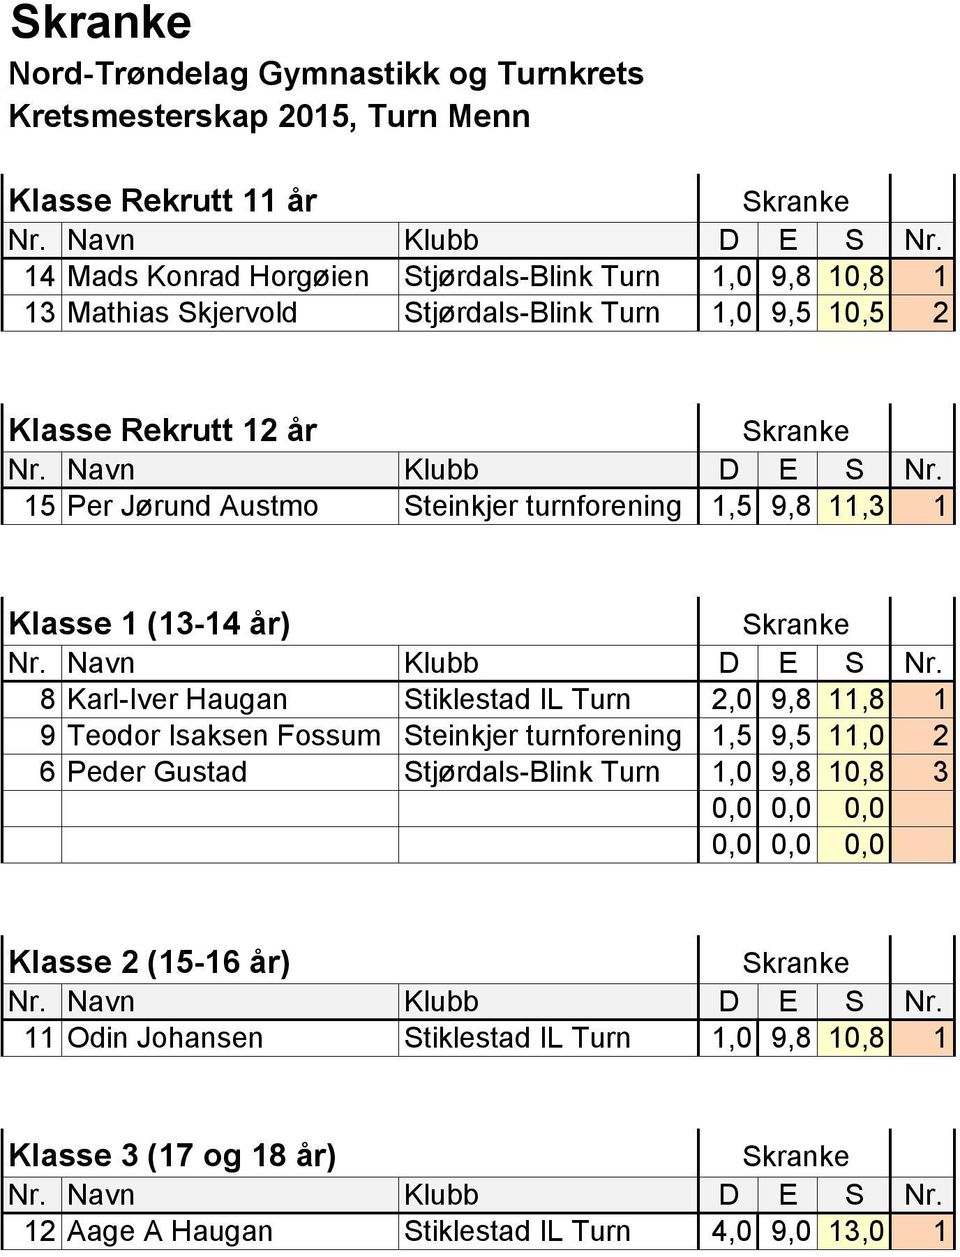 Turn 2,0 9,8 11,8 1 9 Teodor Isaksen Fossum Steinkjer turnforening 1,5 9,5 11,0 2 6 Peder Gustad Stjørdals-Blink Turn 1,0 9,8 10,8 3